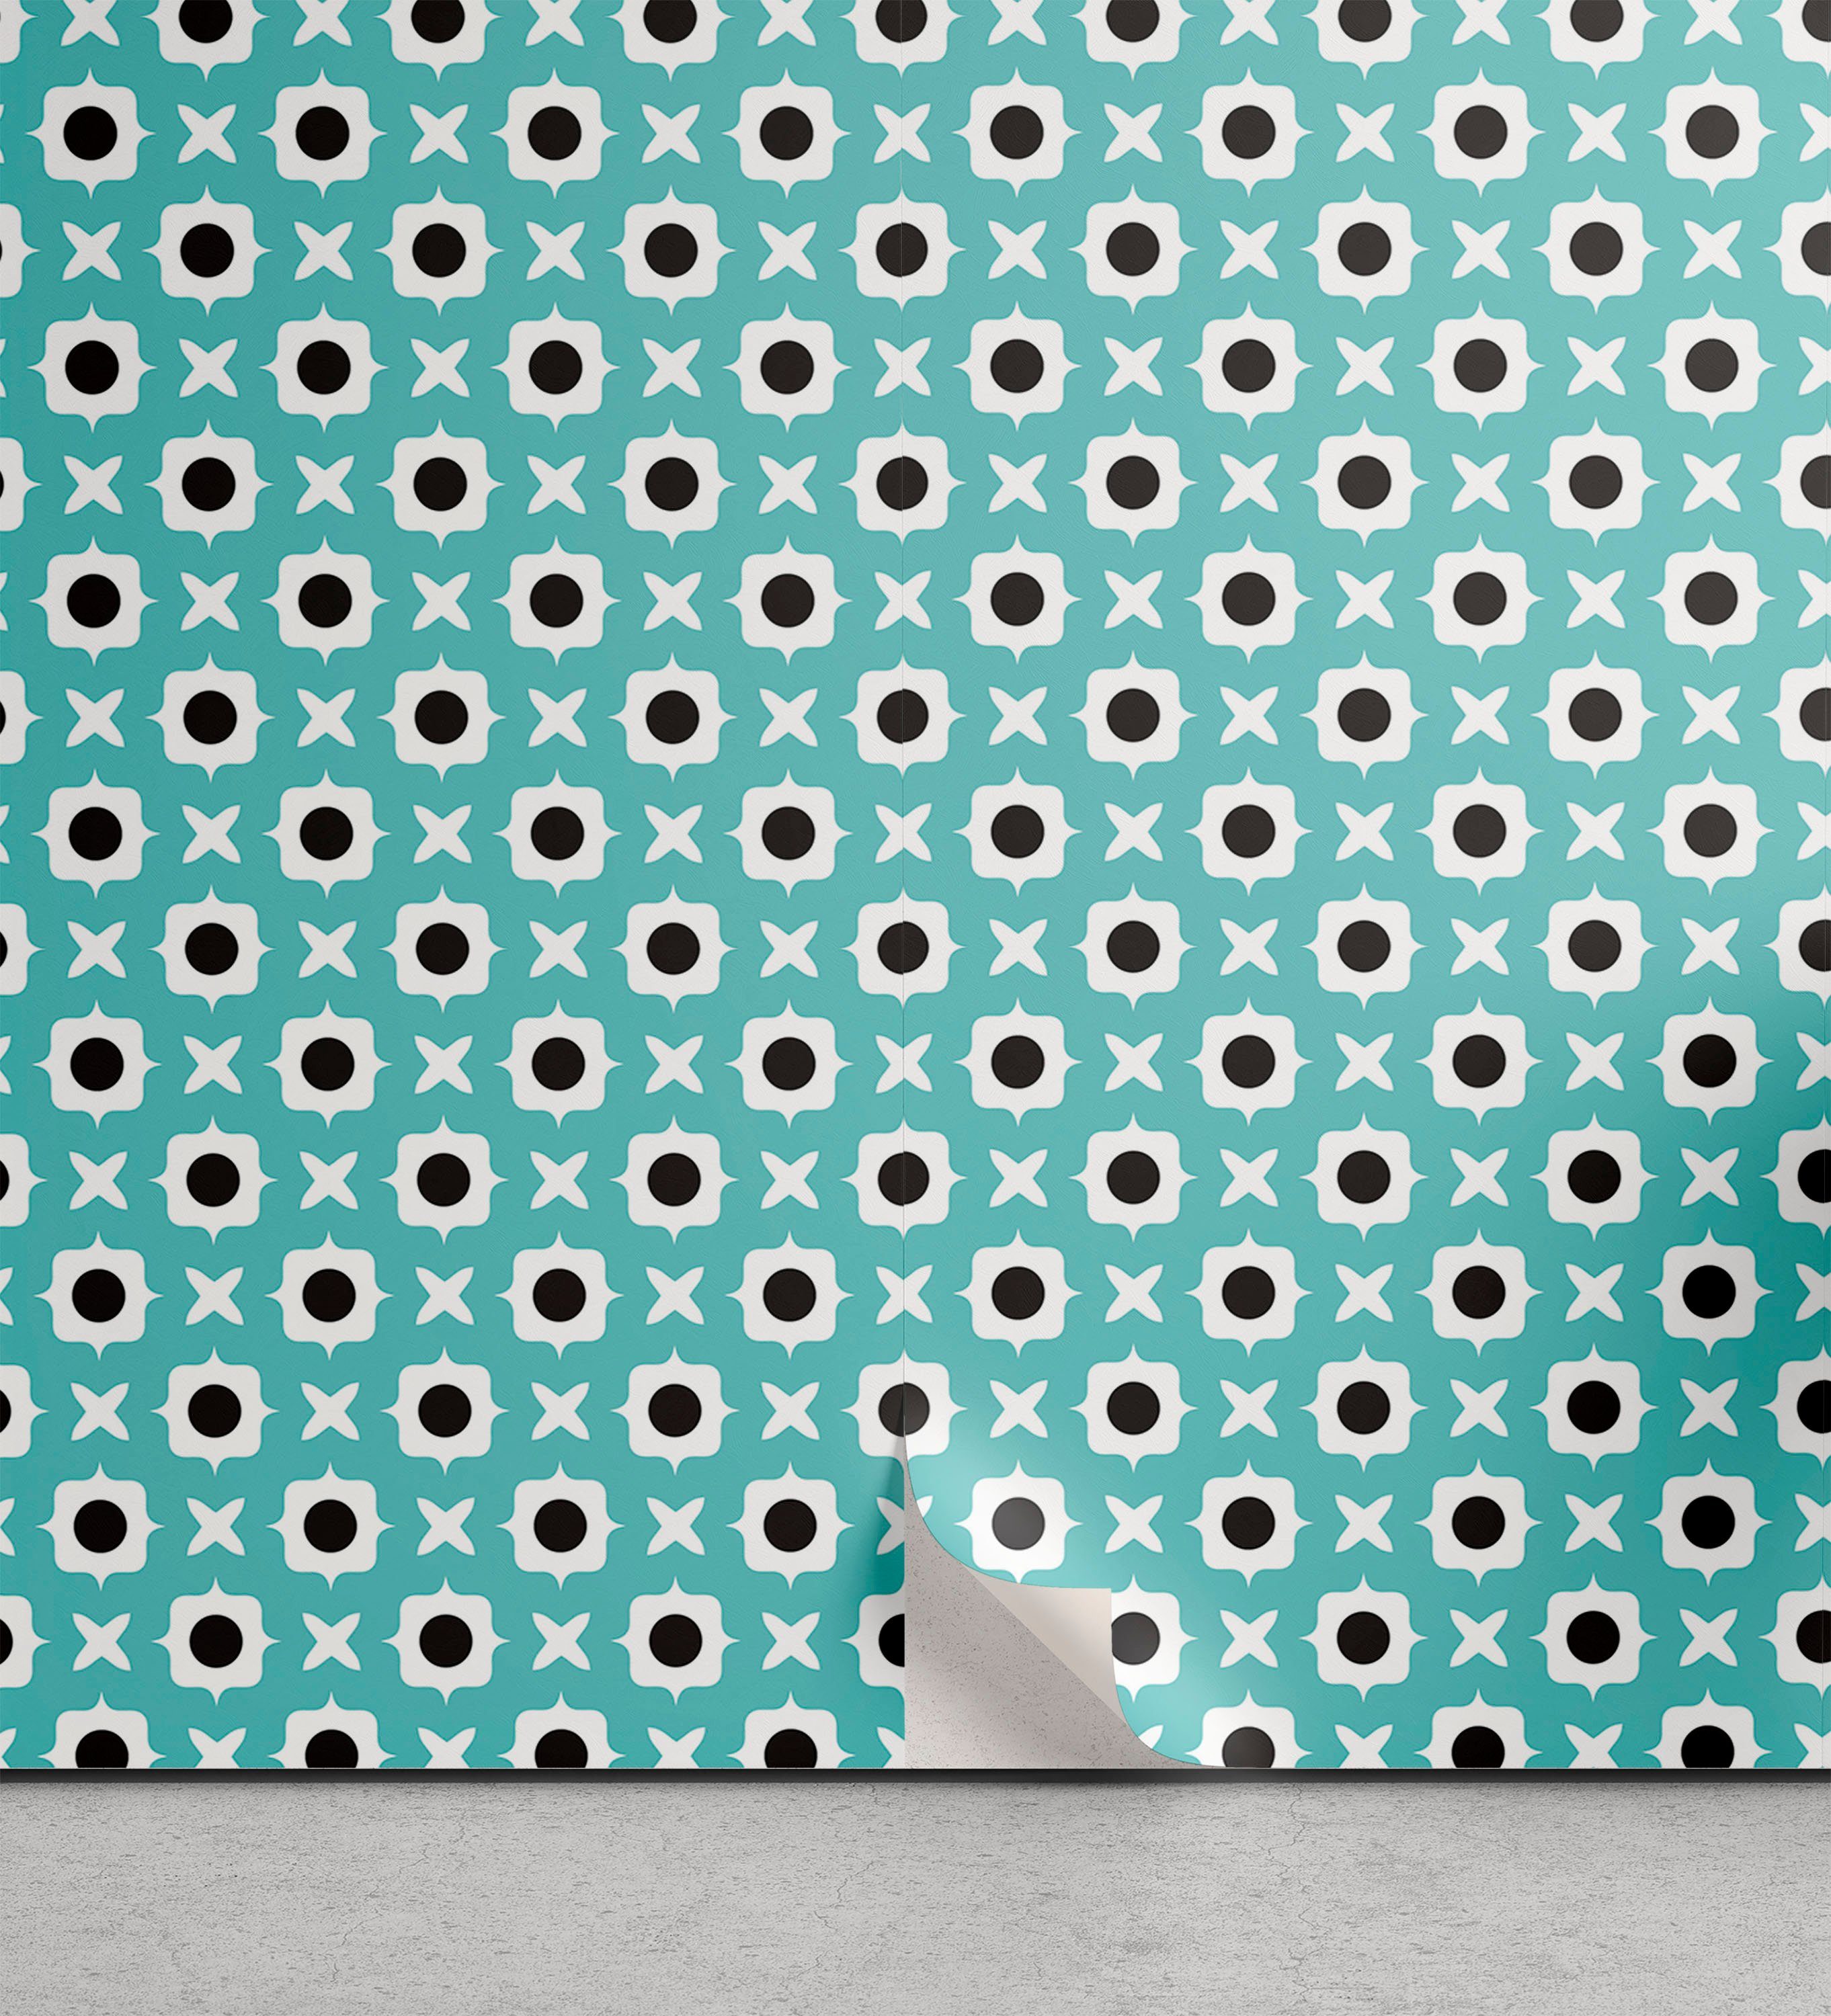 Abakuhaus Vinyltapete selbstklebendes Wohnzimmer Küchenakzent, Retro Abstrakte Ornamente Dots